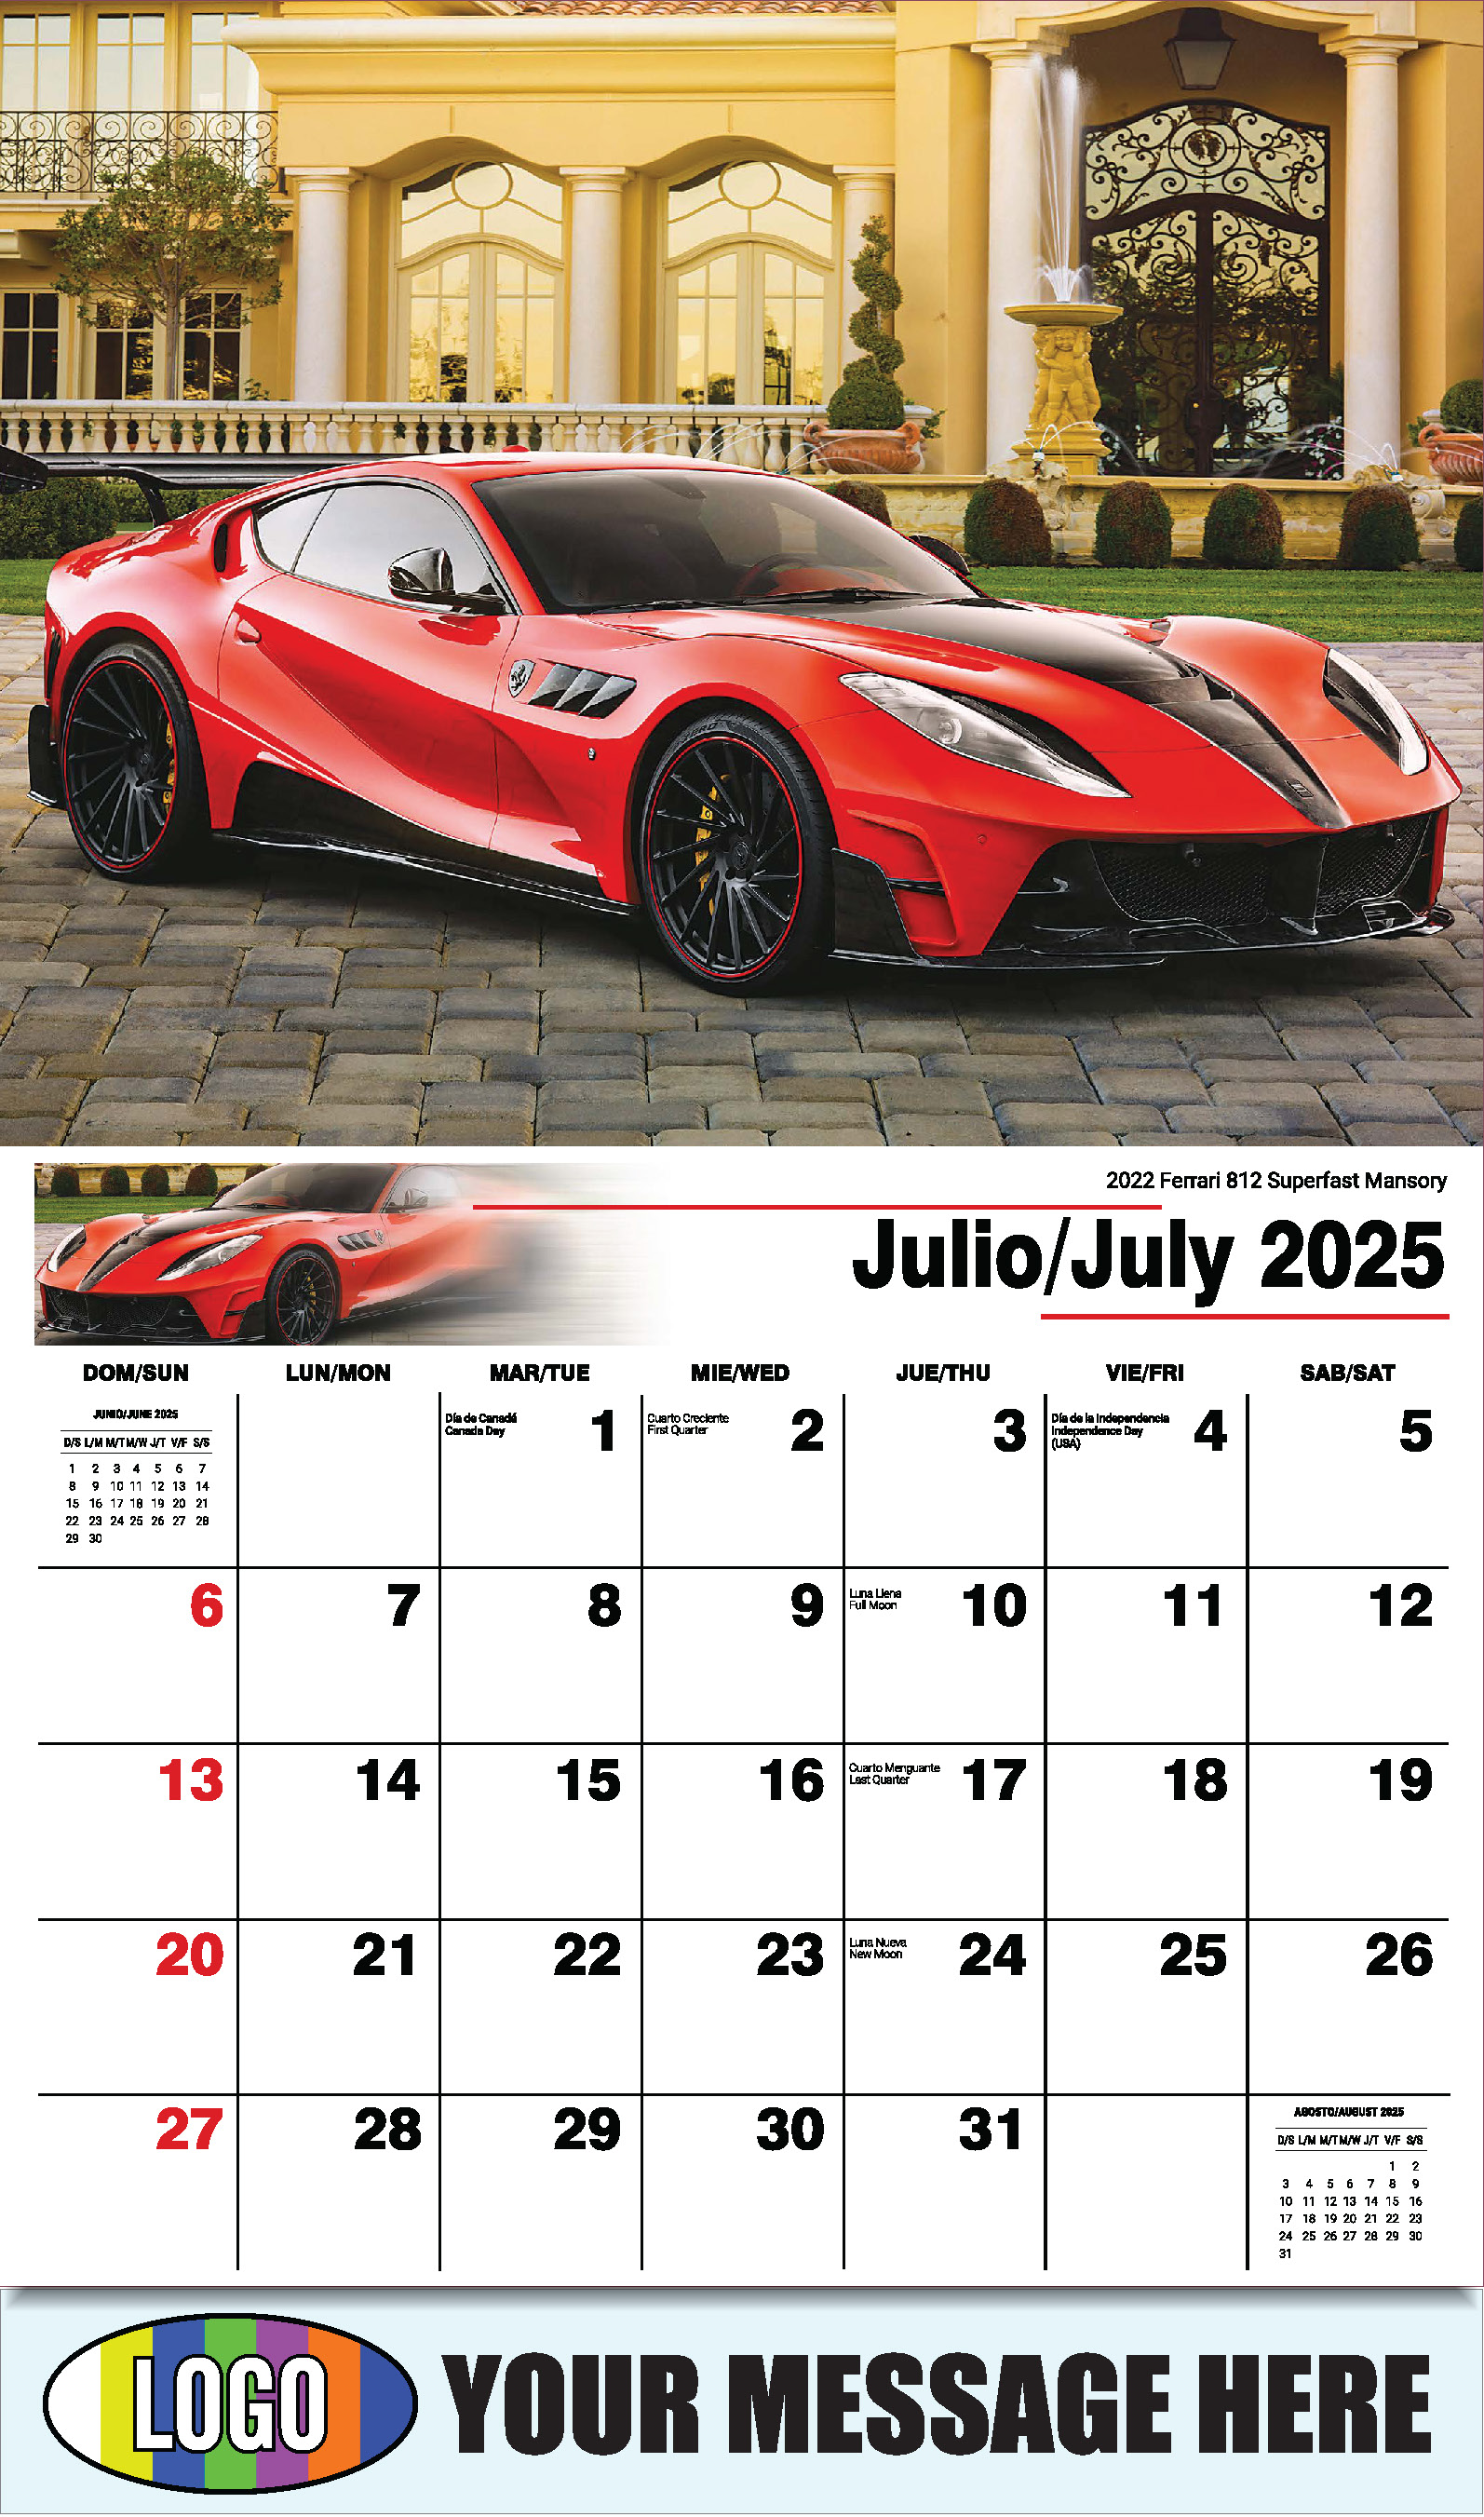 Exotic Cars 2025 Bilingual Automotive Business Promotional Calendar - July